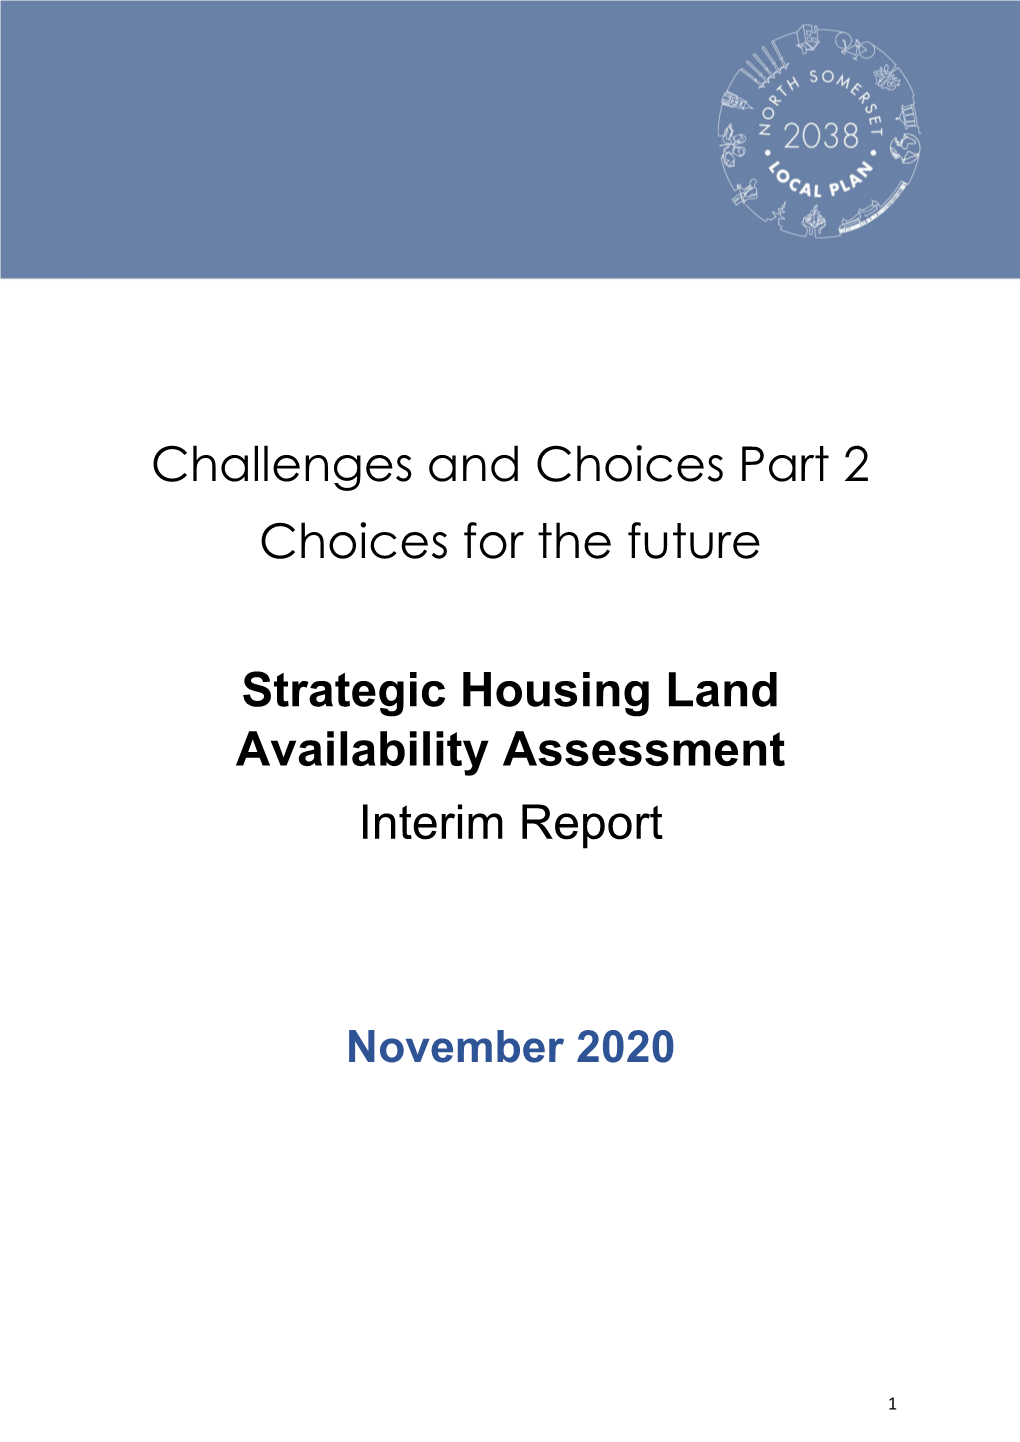 Strategic Housing Land Availability Assessment Interim Report